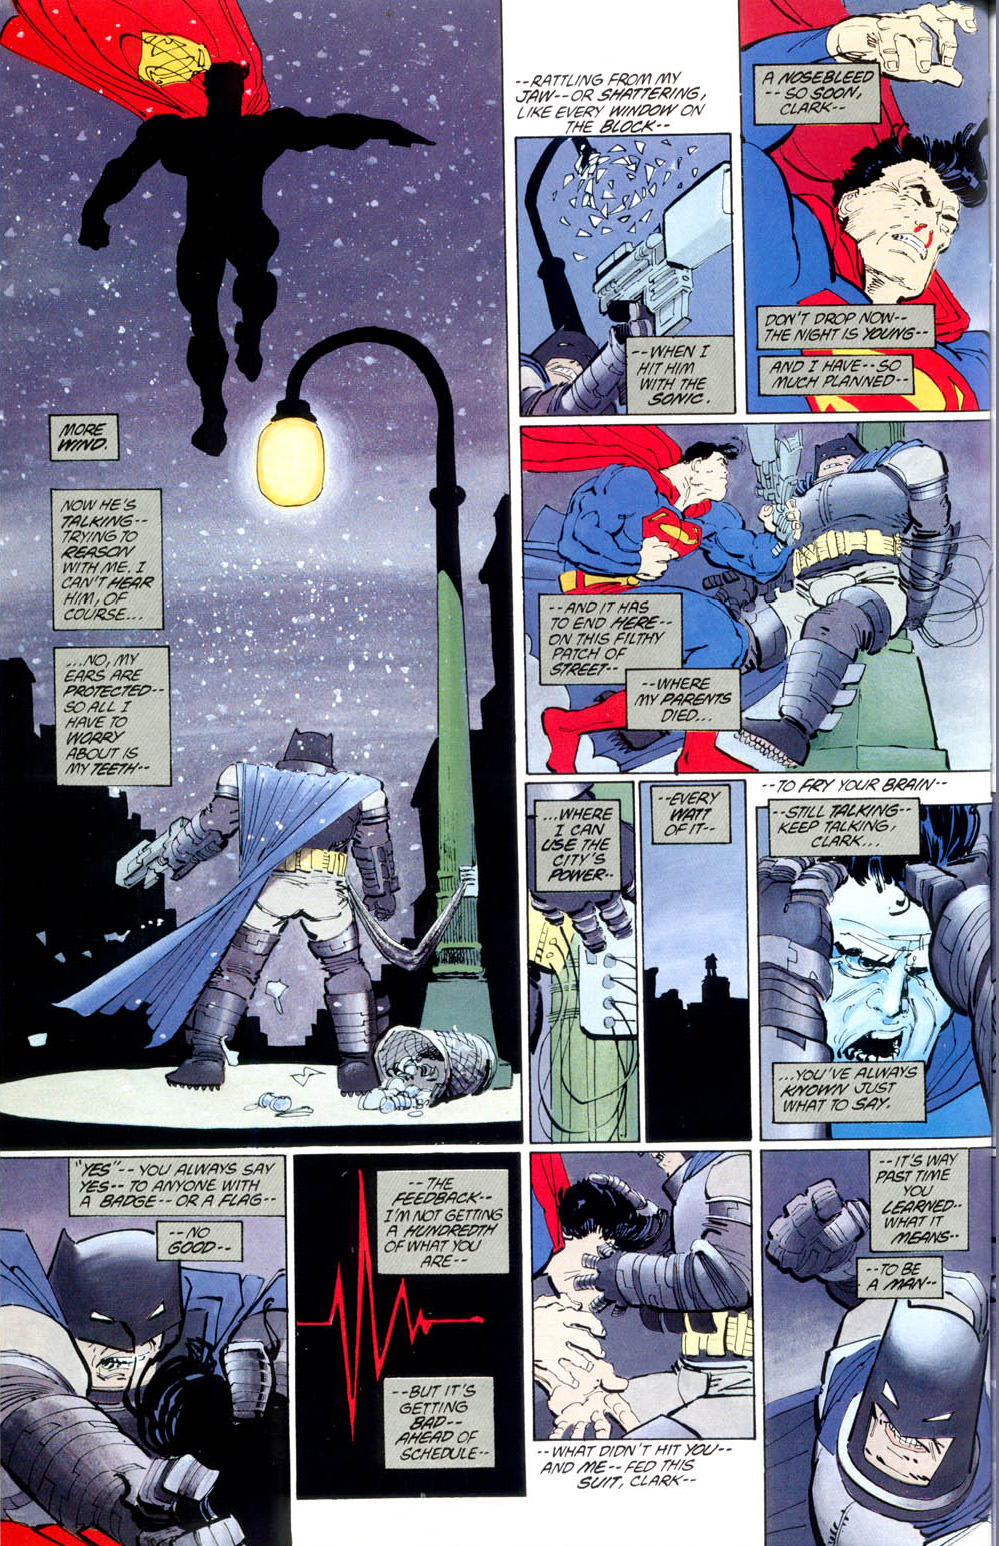 batman-vs-superman-the-dark-knight-returns-11.jpg